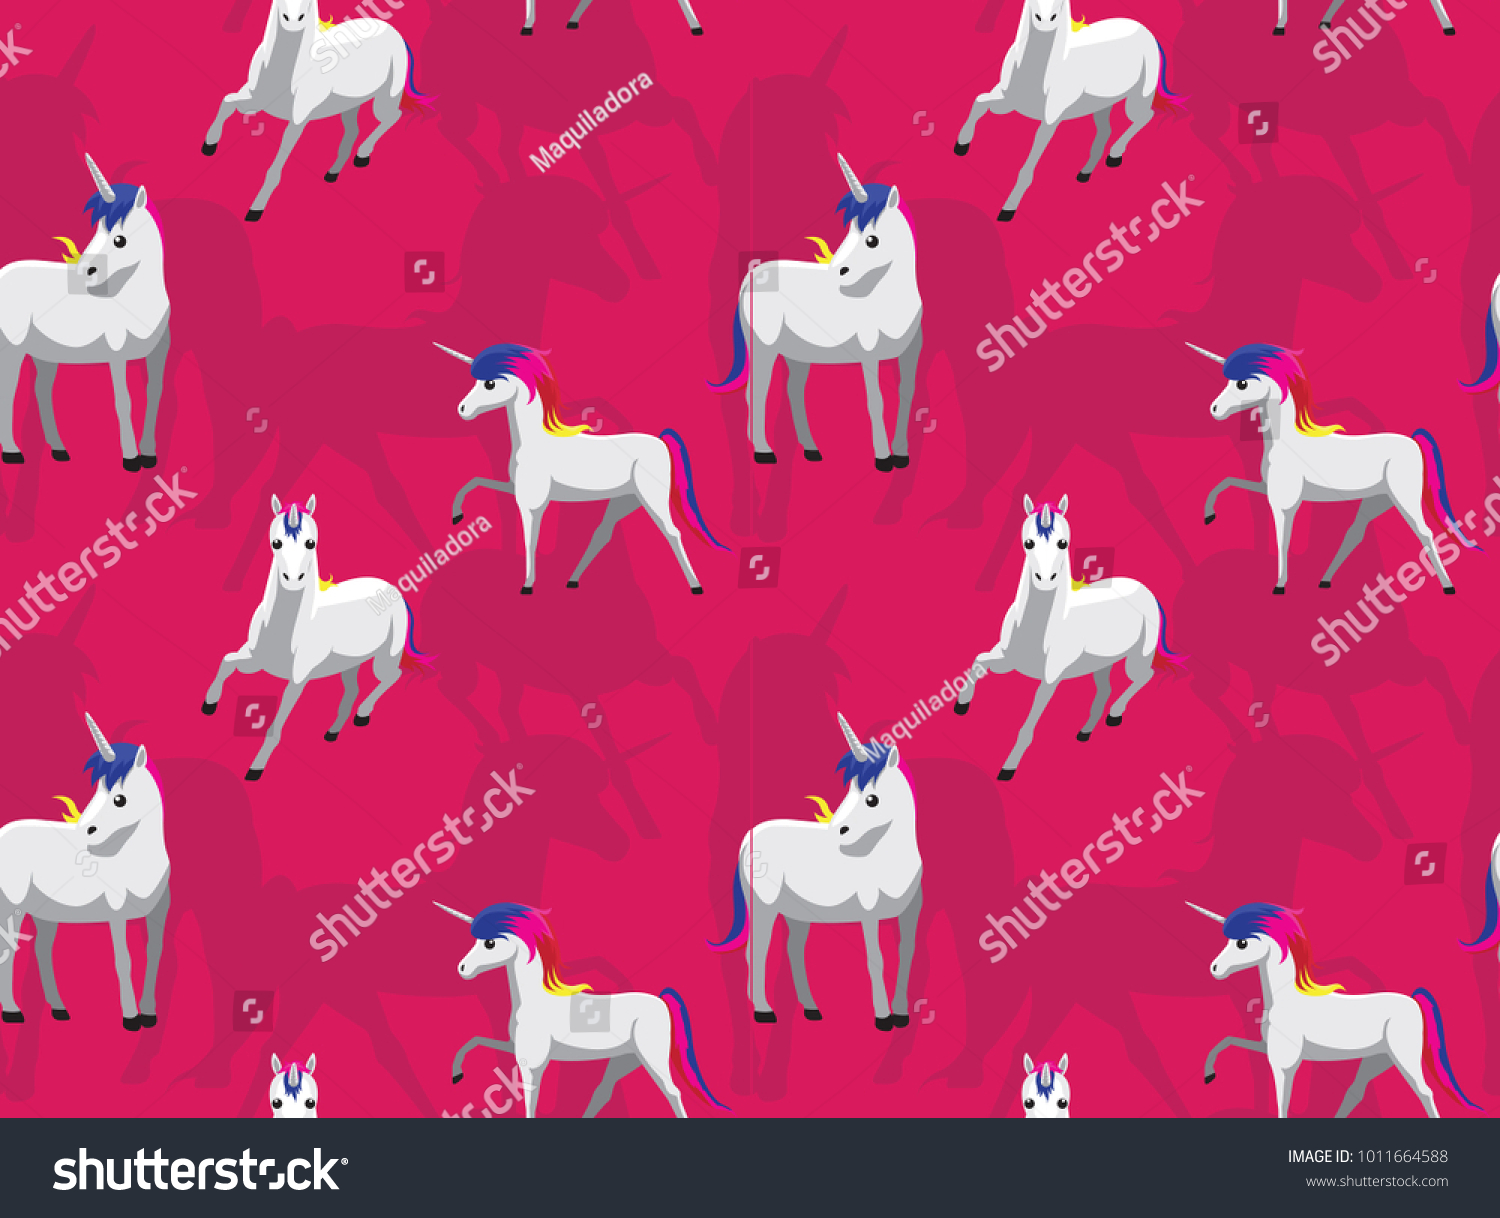 Cute Unicorn Cartoon Seamless Wallpaper Stock Vector 1011664588